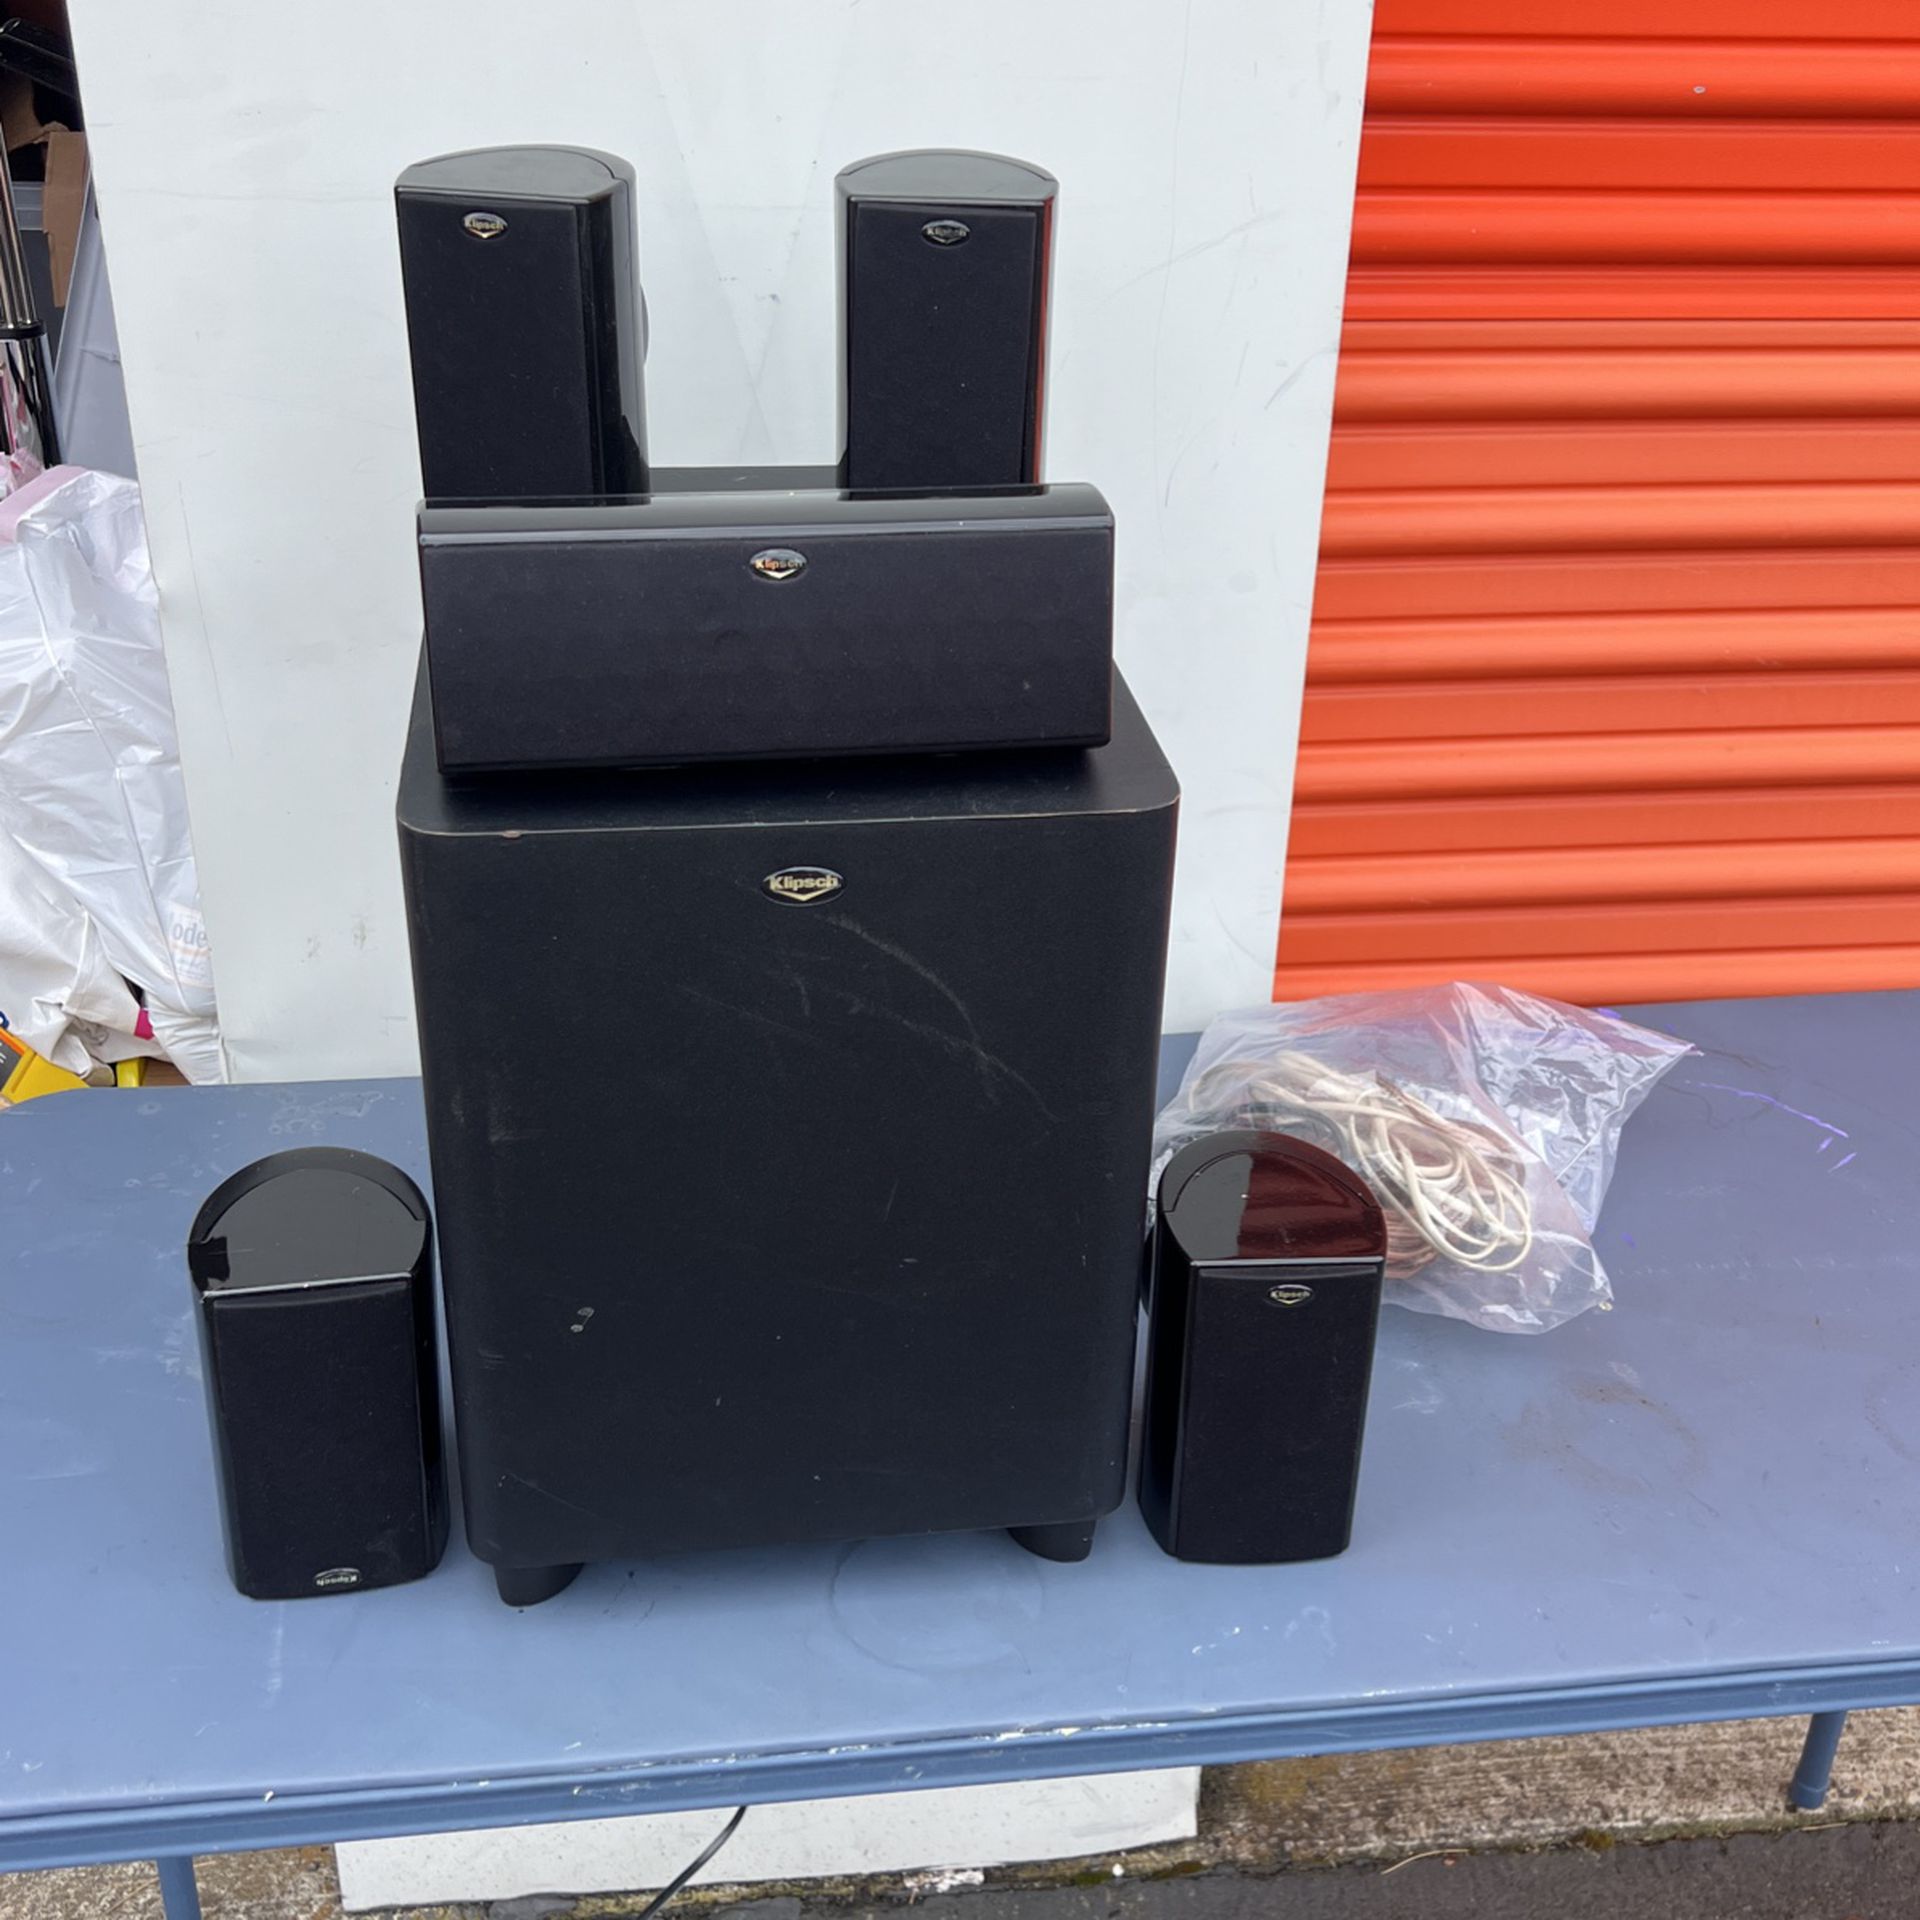 Klipsch speaker system